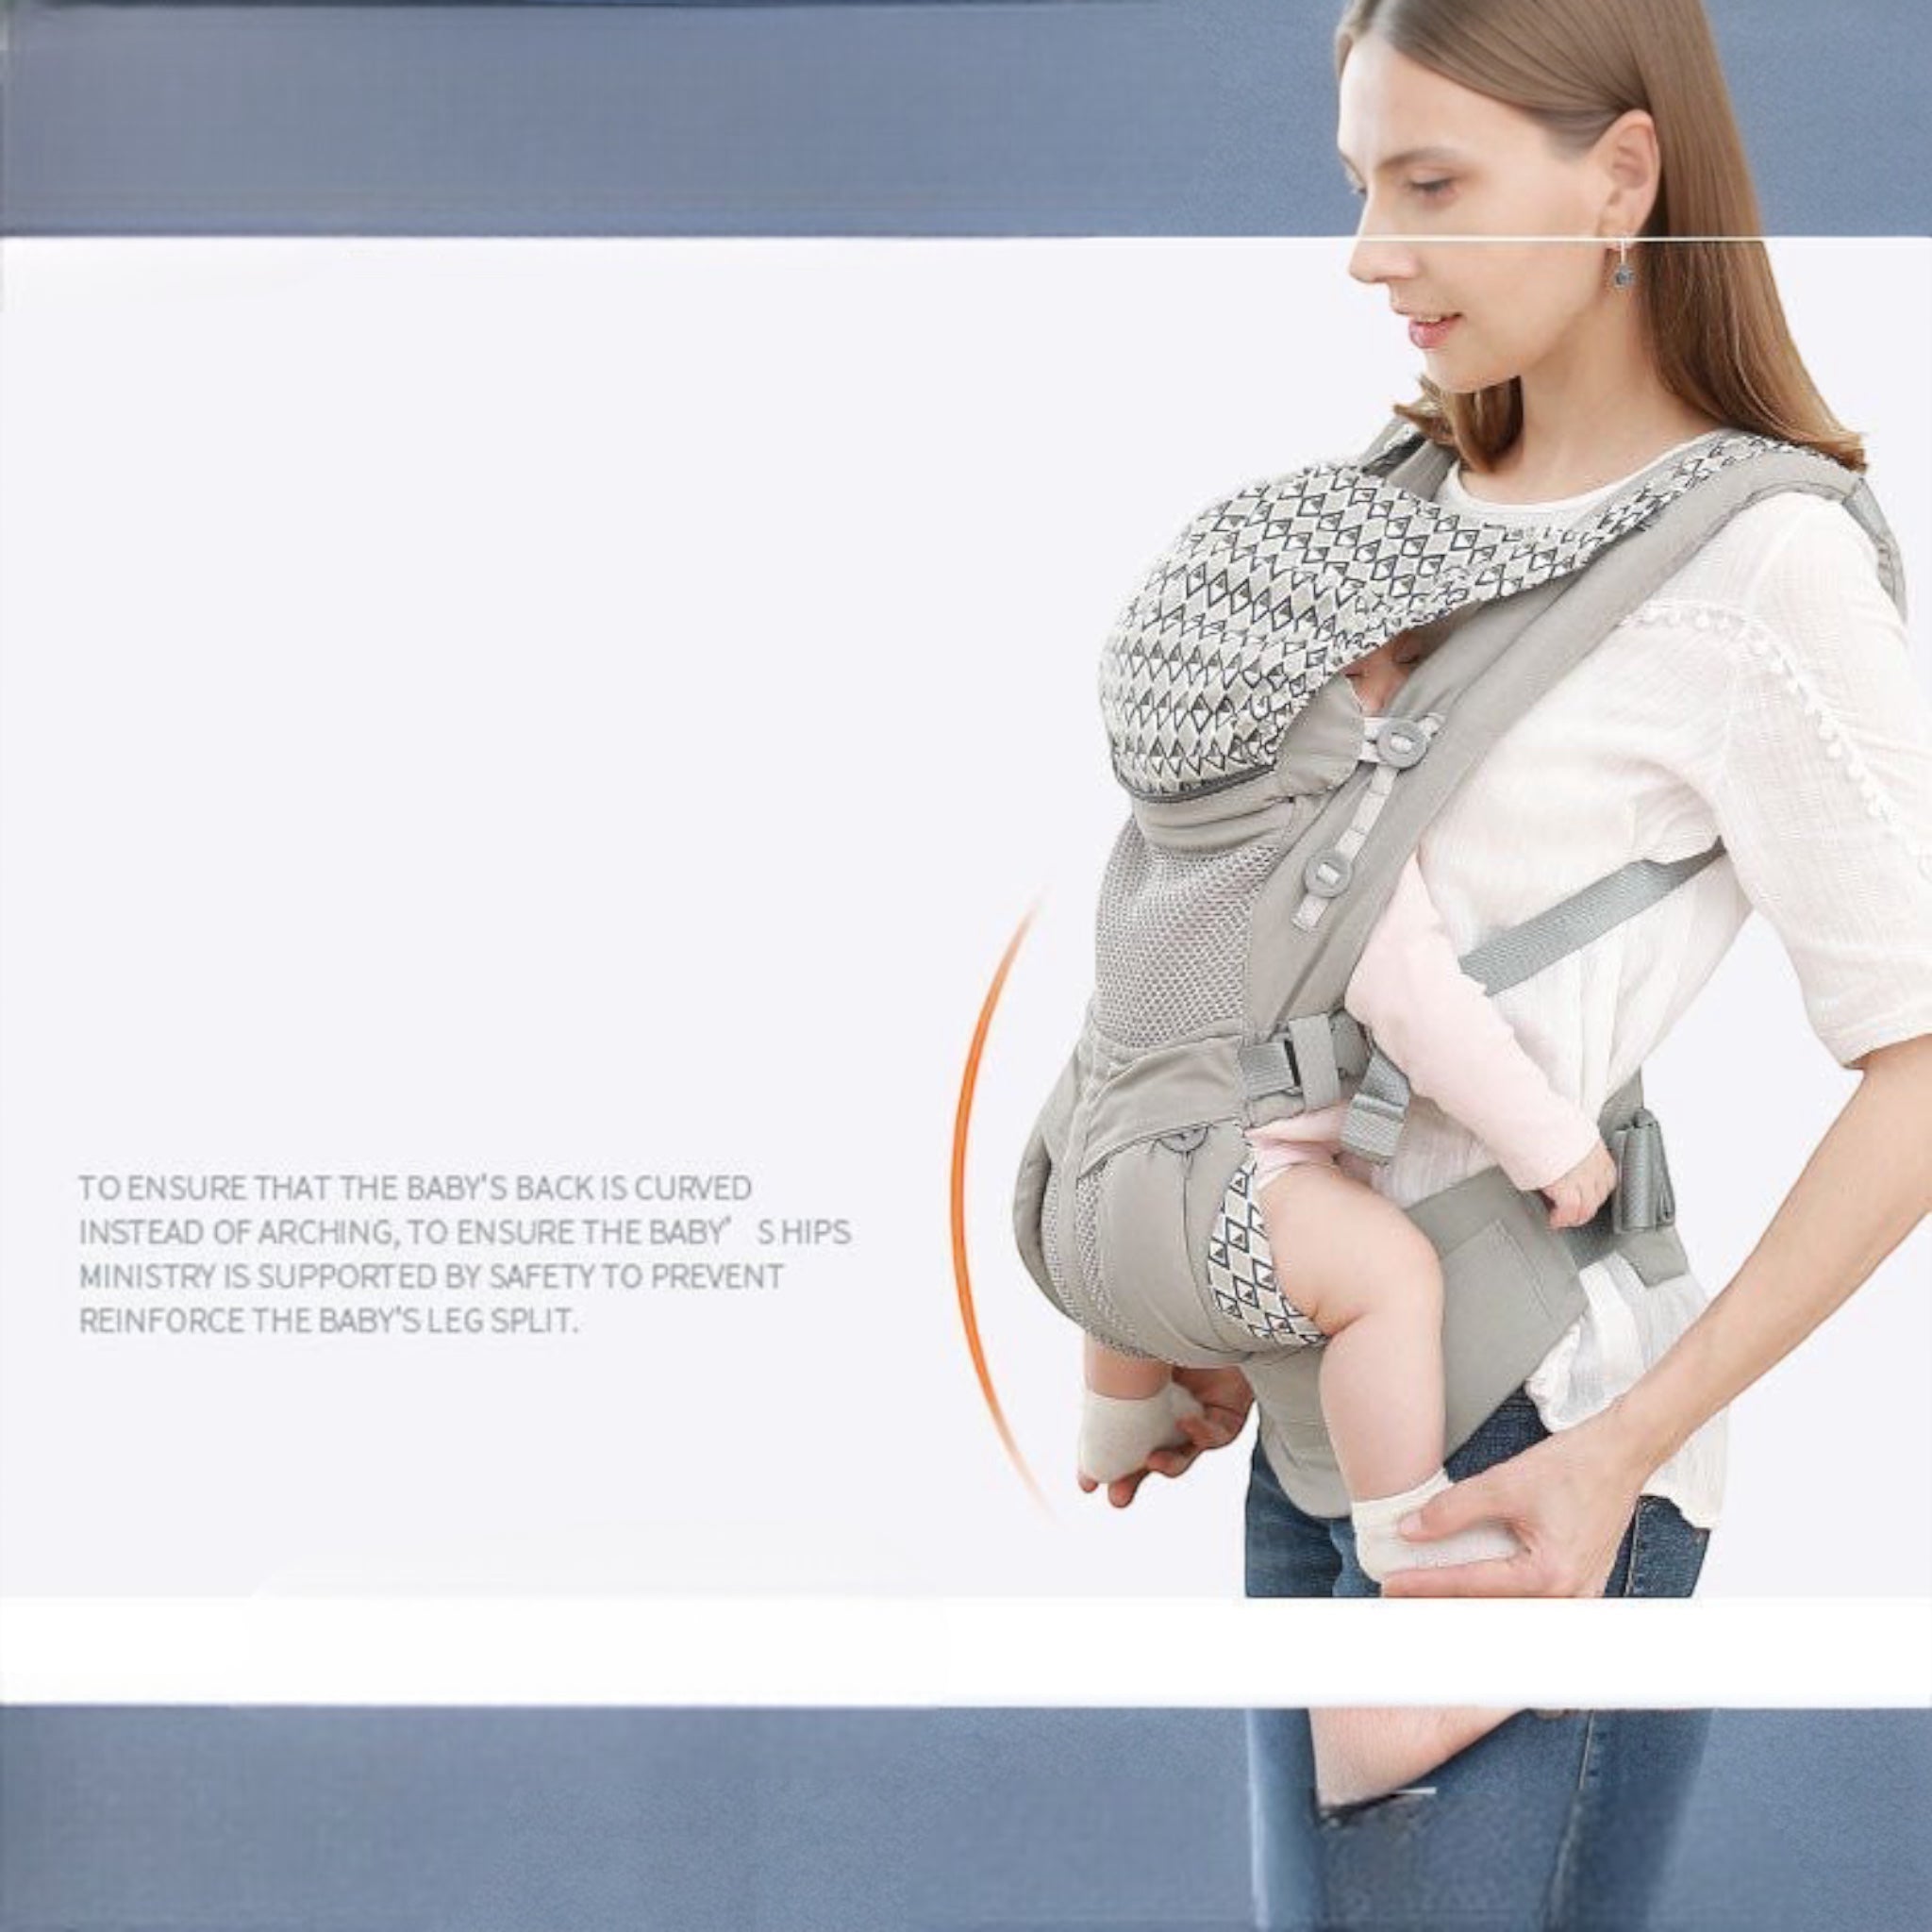 Baby Carrier Ergonomic Kangaroo Infant Kid Sling Back Front Facing Backpack Wrap Baby Bag